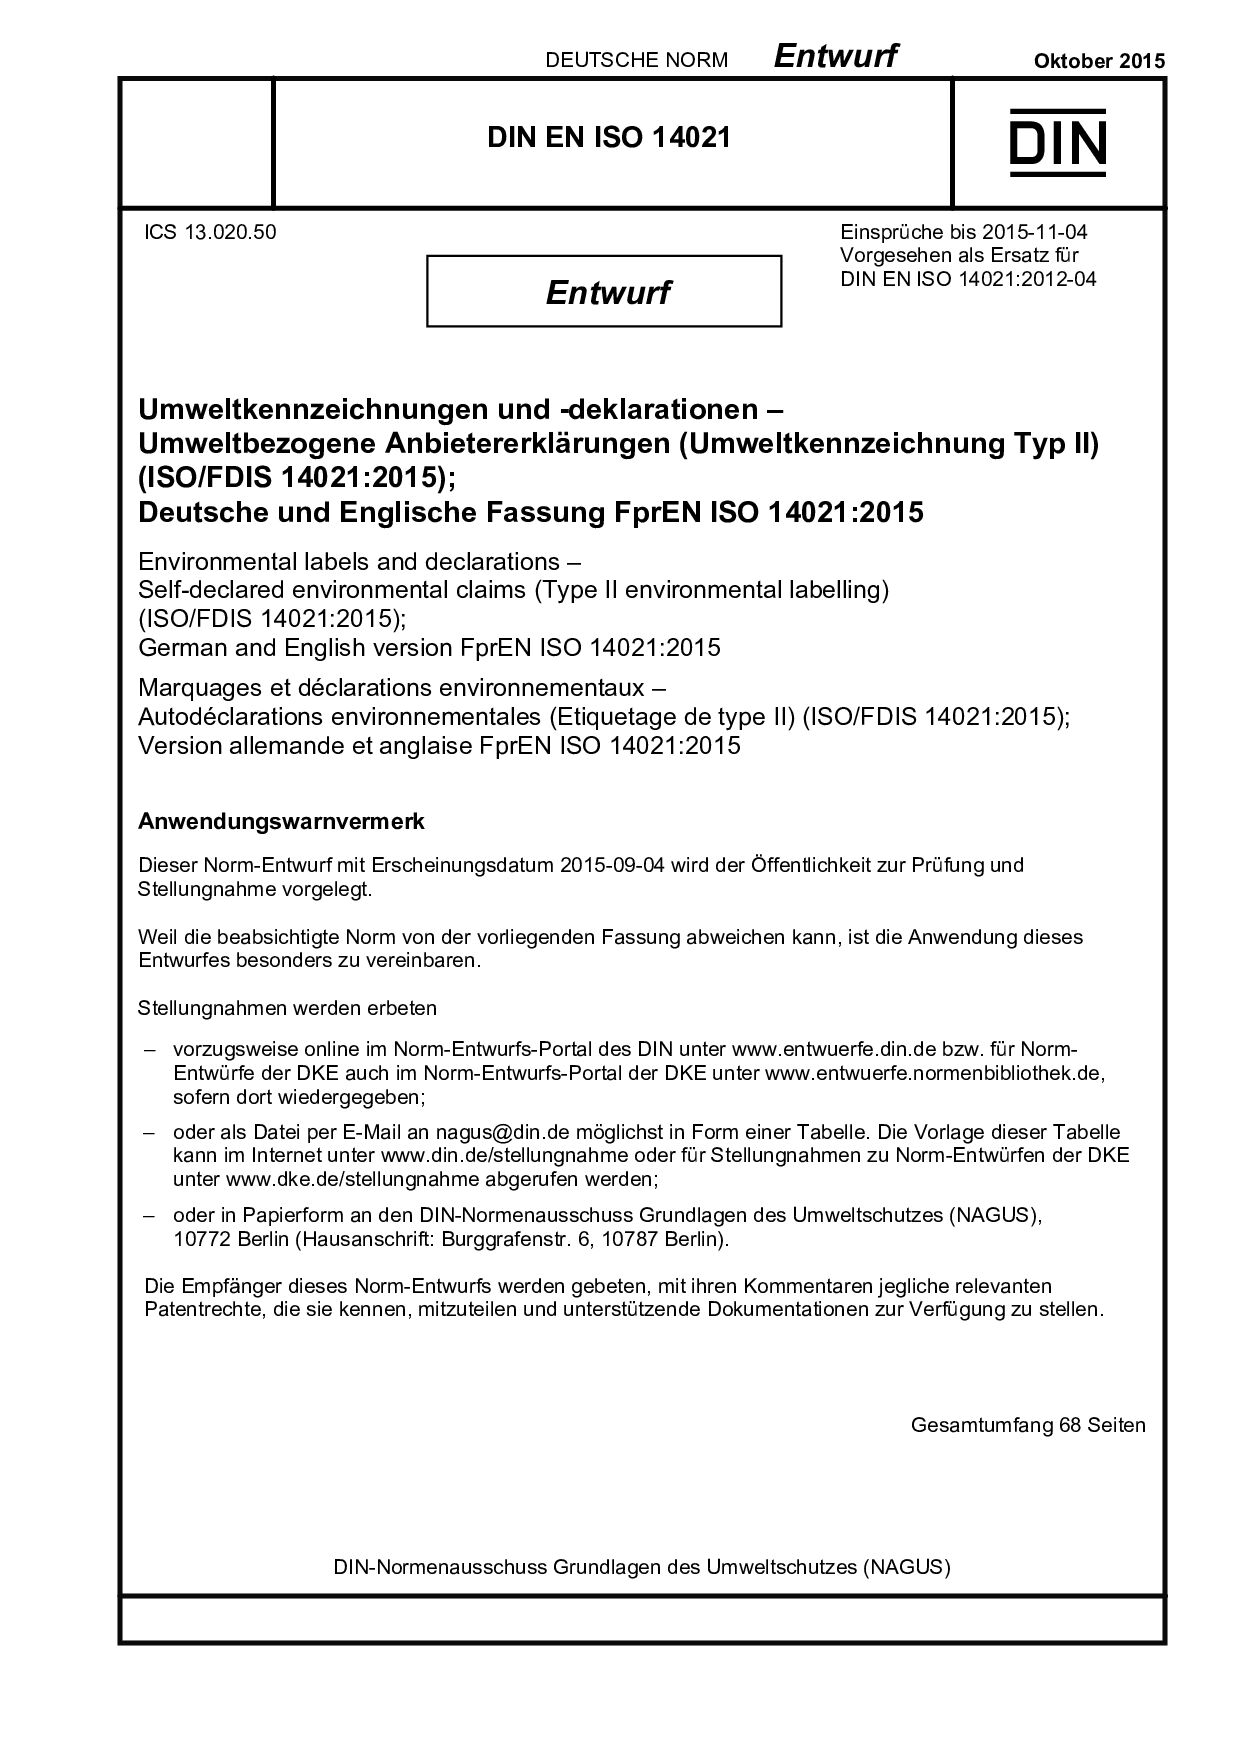 DIN EN ISO 14021 E:2015-10